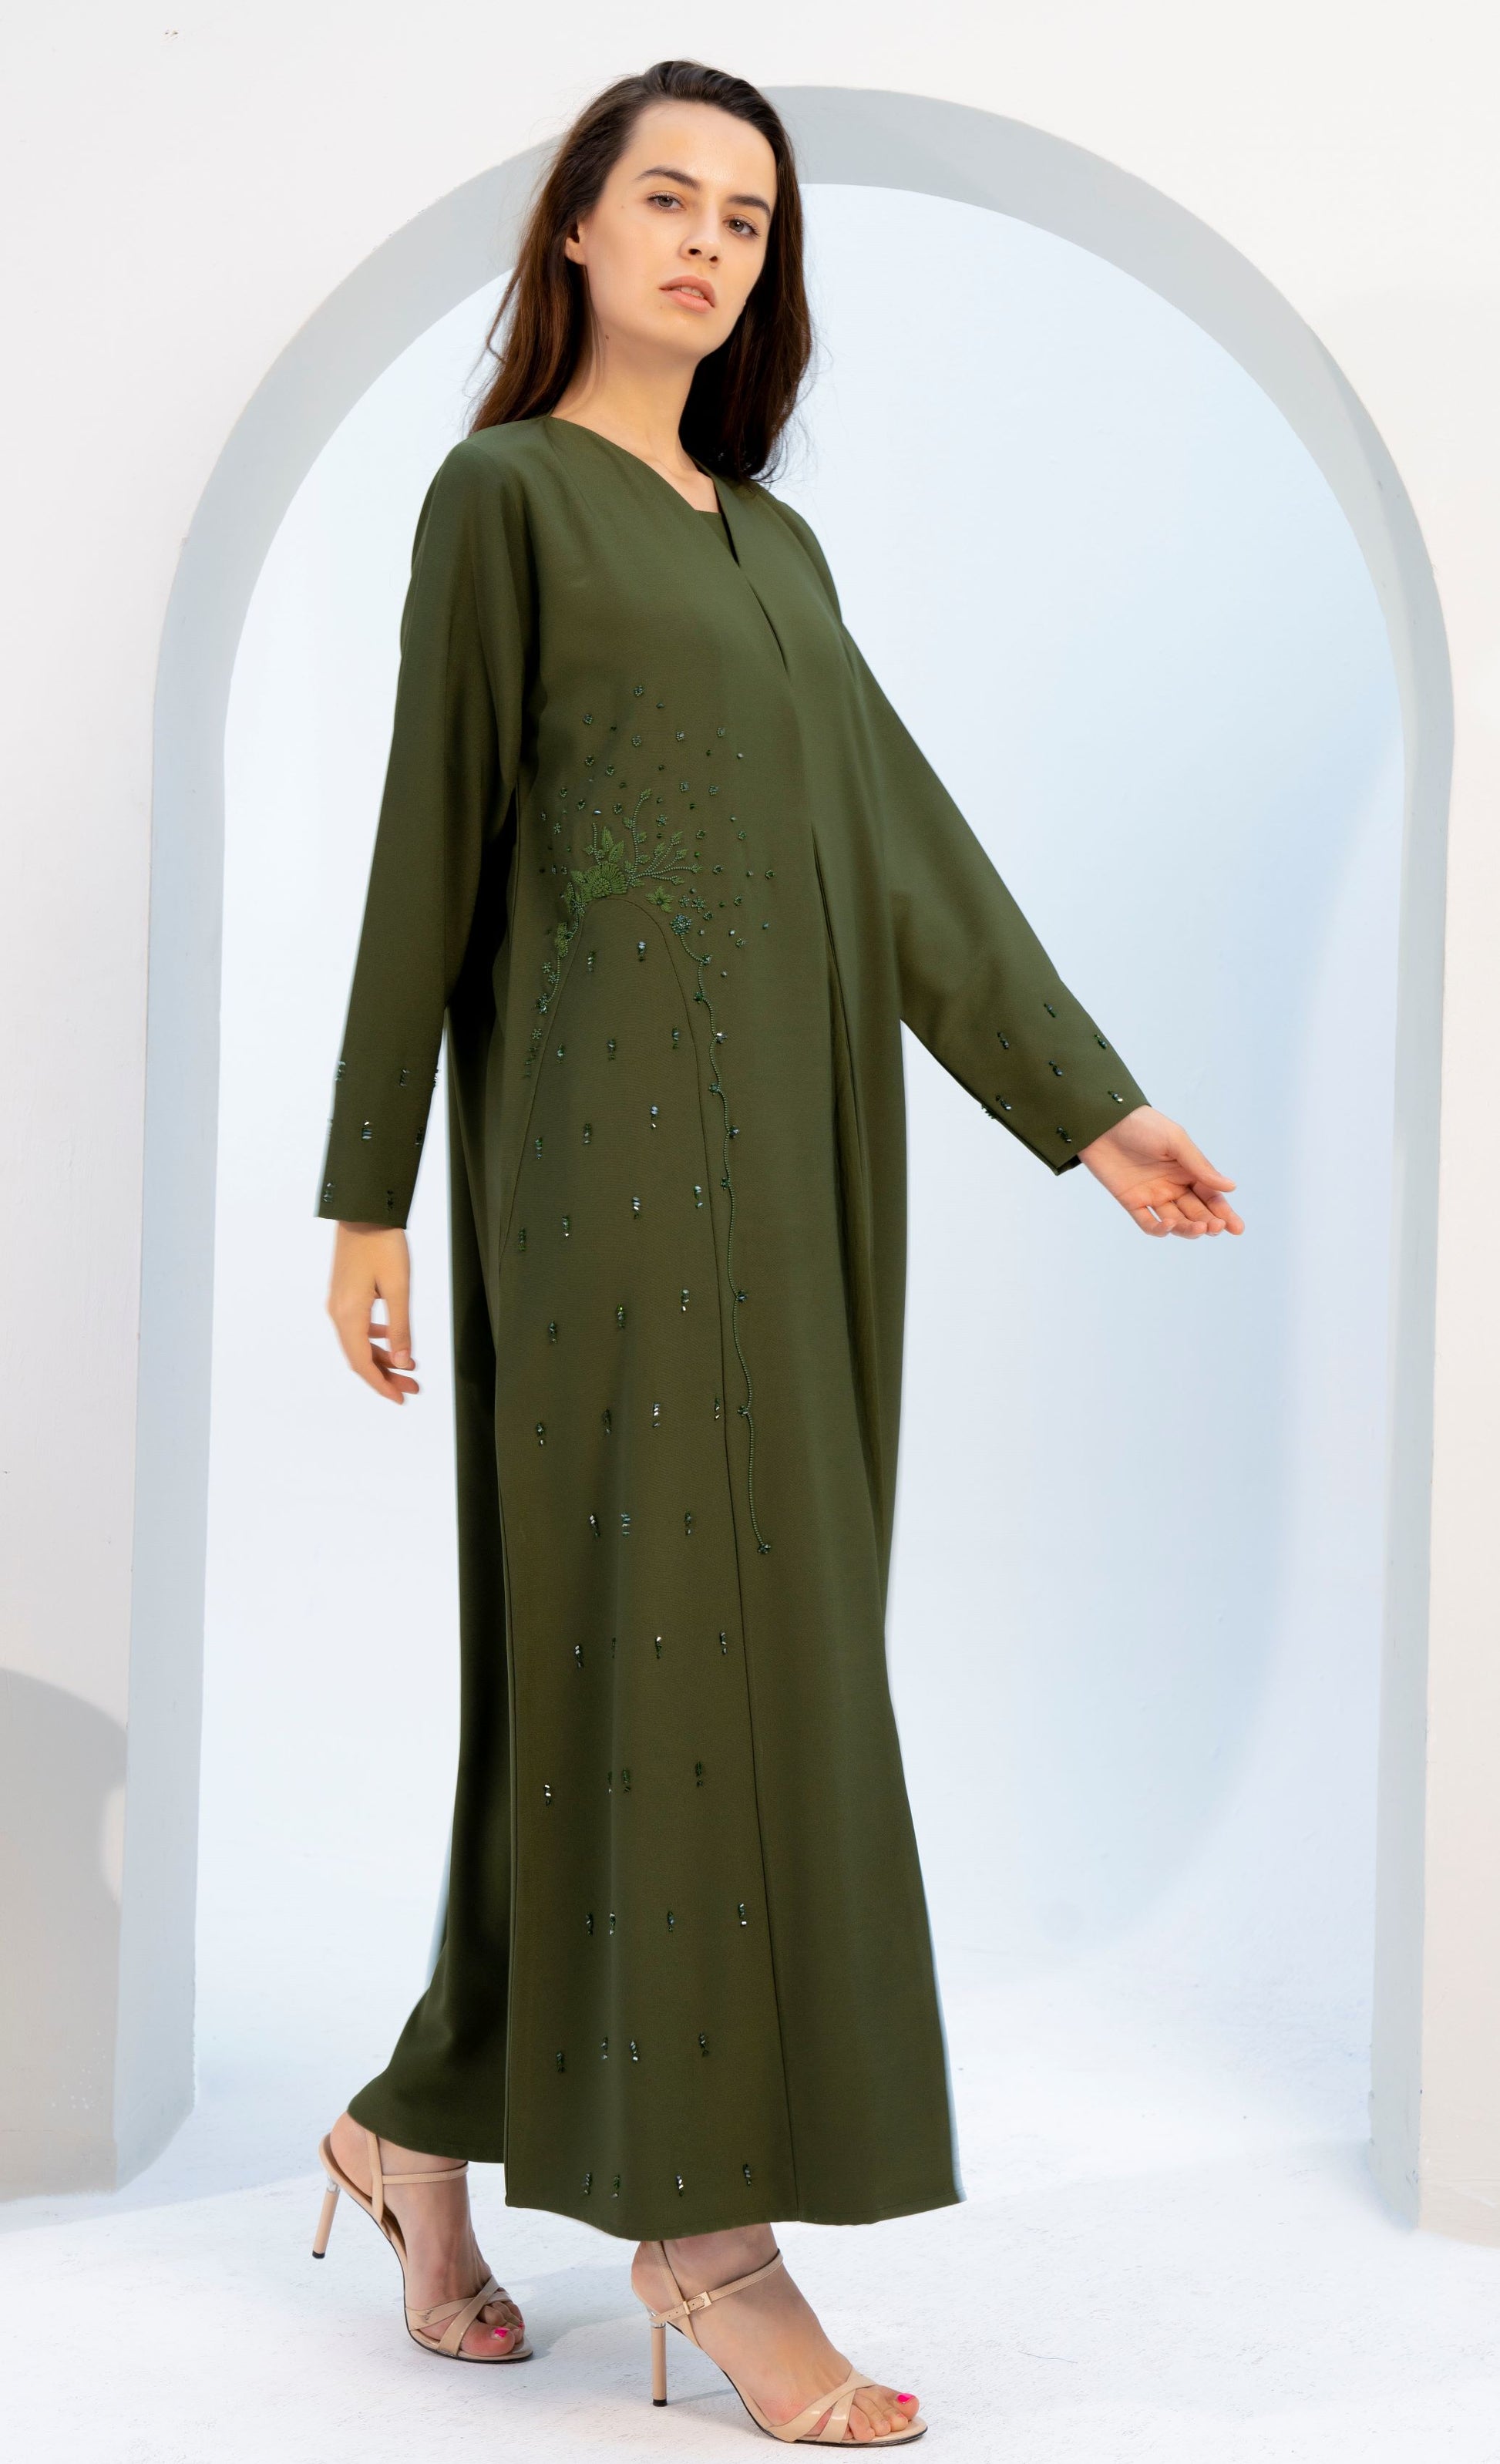 girl wearing green abaya with embellishments